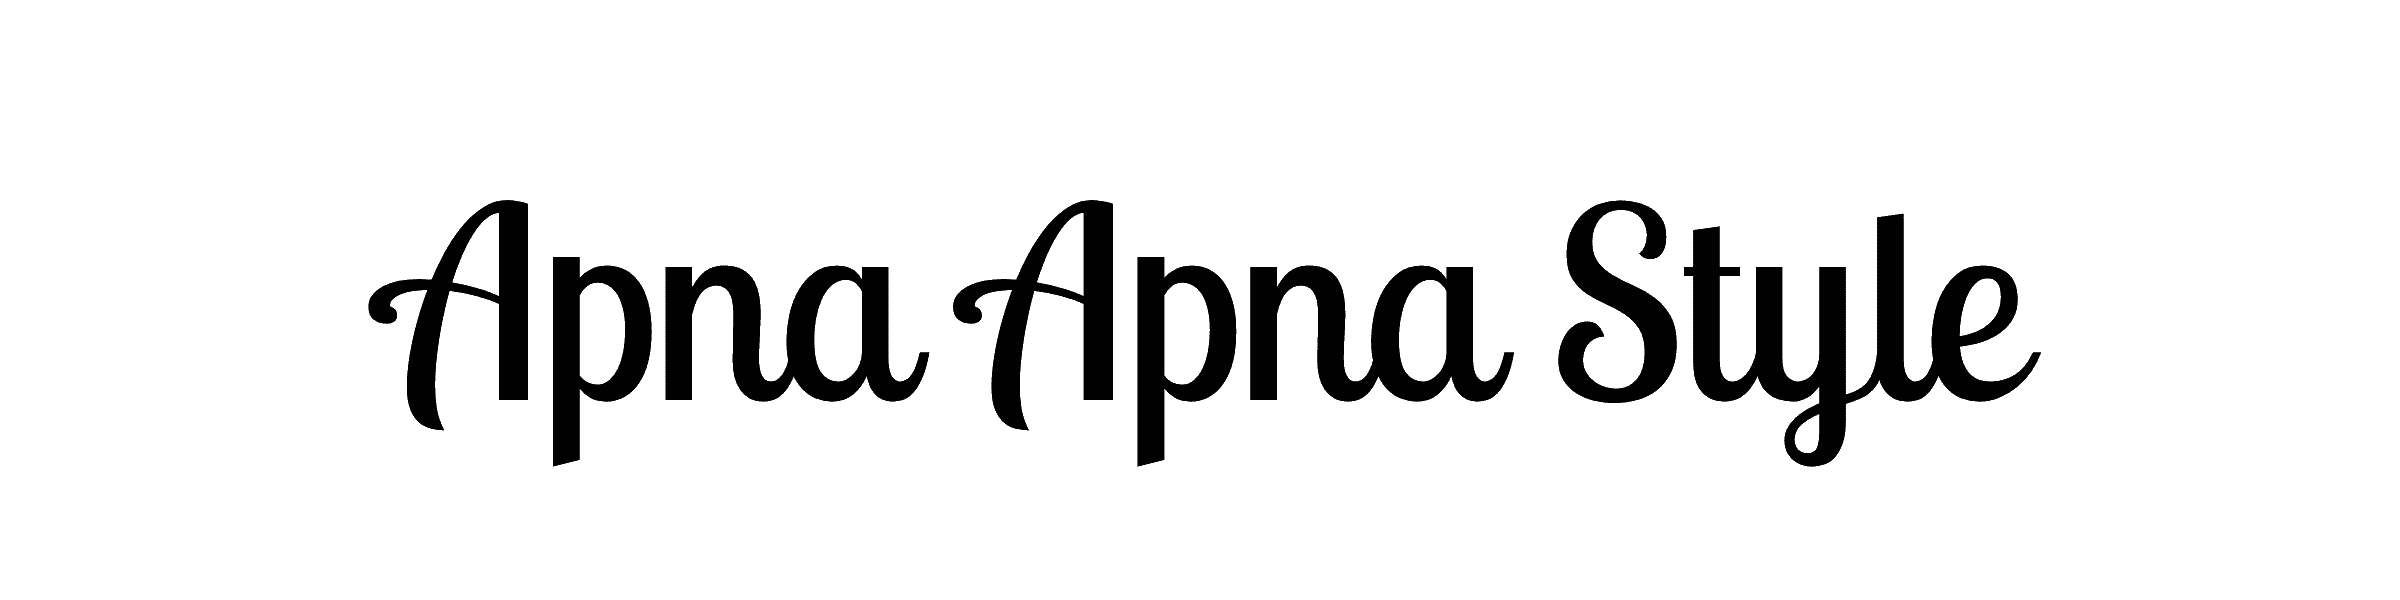 Apna Apna Style Terms & Conditions